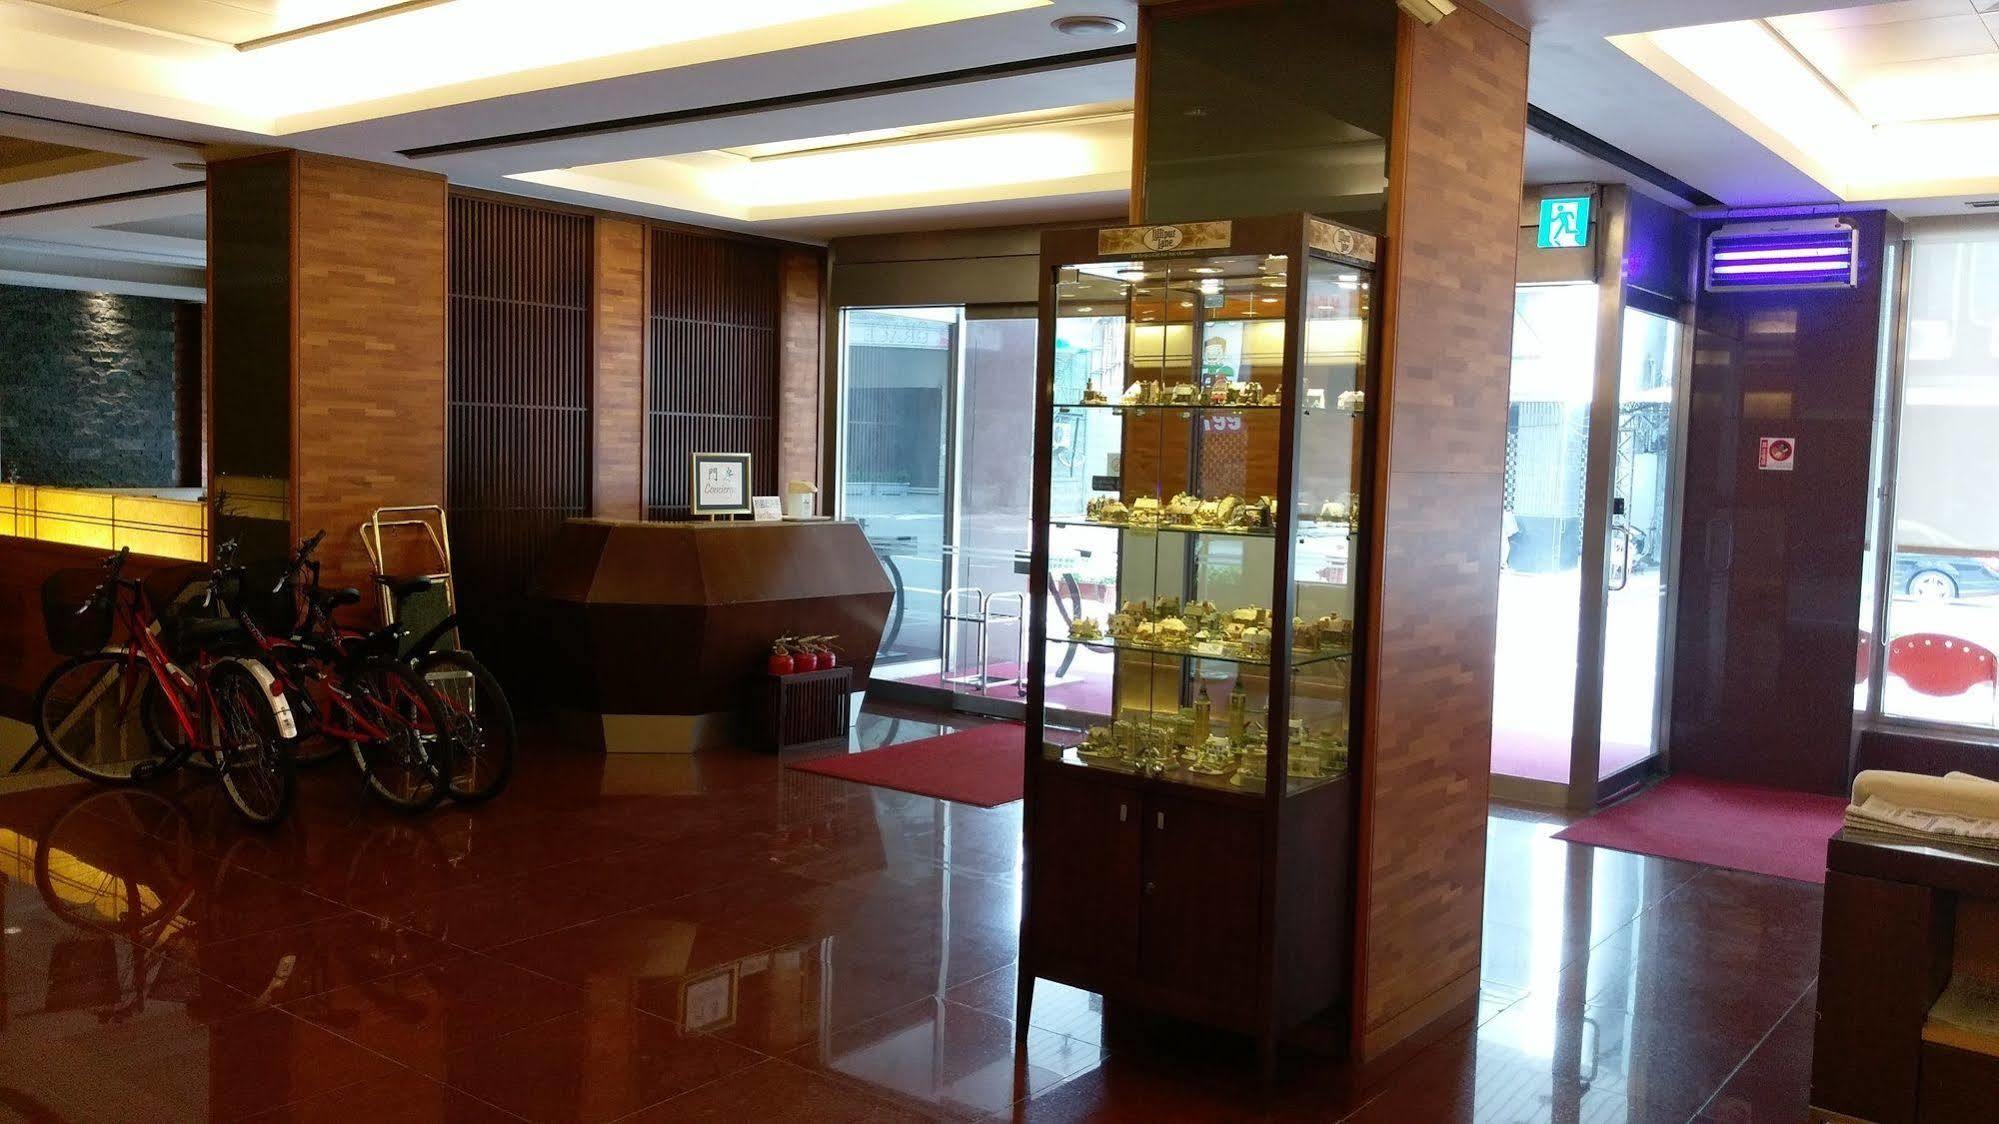 The Premier Hotel Tainan Exterior photo